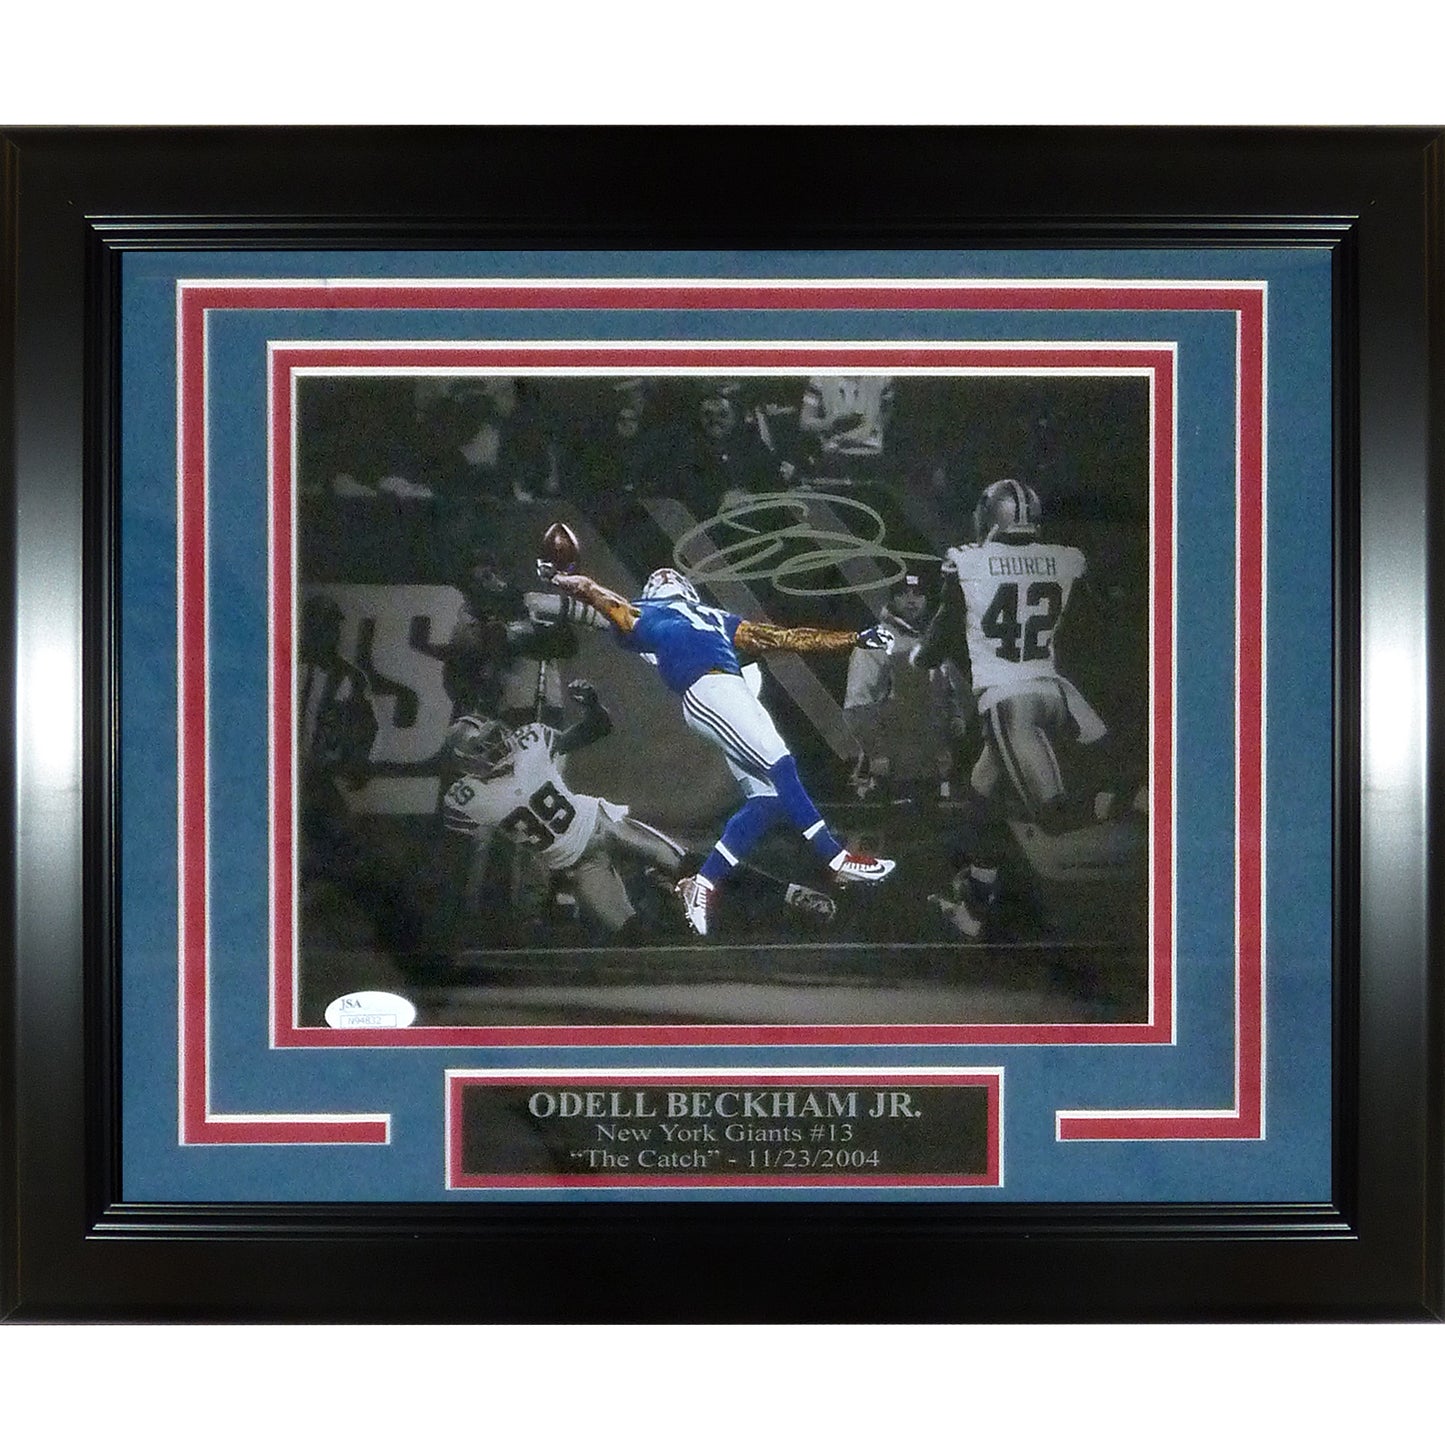 Odell Beckham Jr. Autographed New York Giants (The Catch) Deluxe Framed 8x10 Photo - JSA